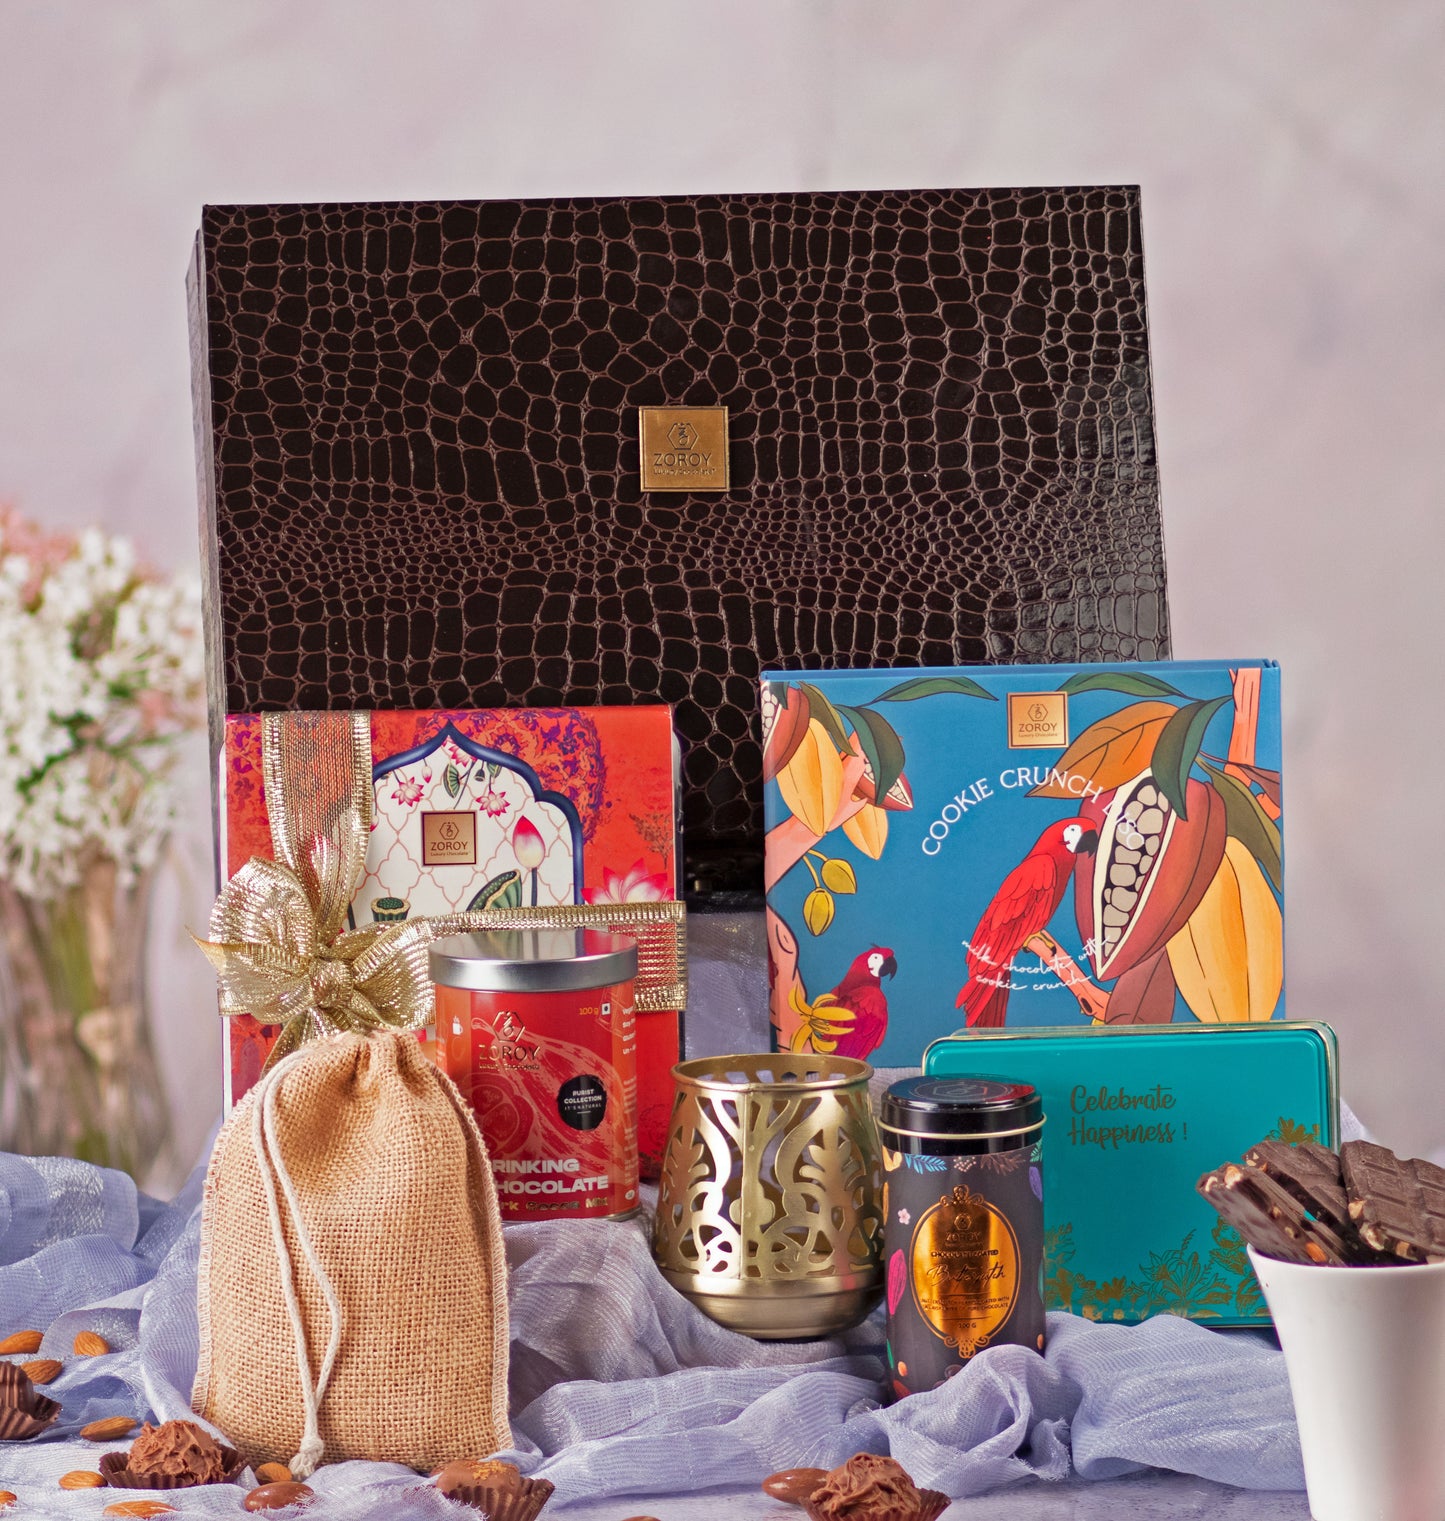 ZOROY Luxury Chocolate Festive Sandook Gift Hamper For Diwali Corporate Birthday Weeding essentials | Belgian style chocolate | Dry fruits | Metal T-lite Holder | Coated nuts | Drinking chocolate